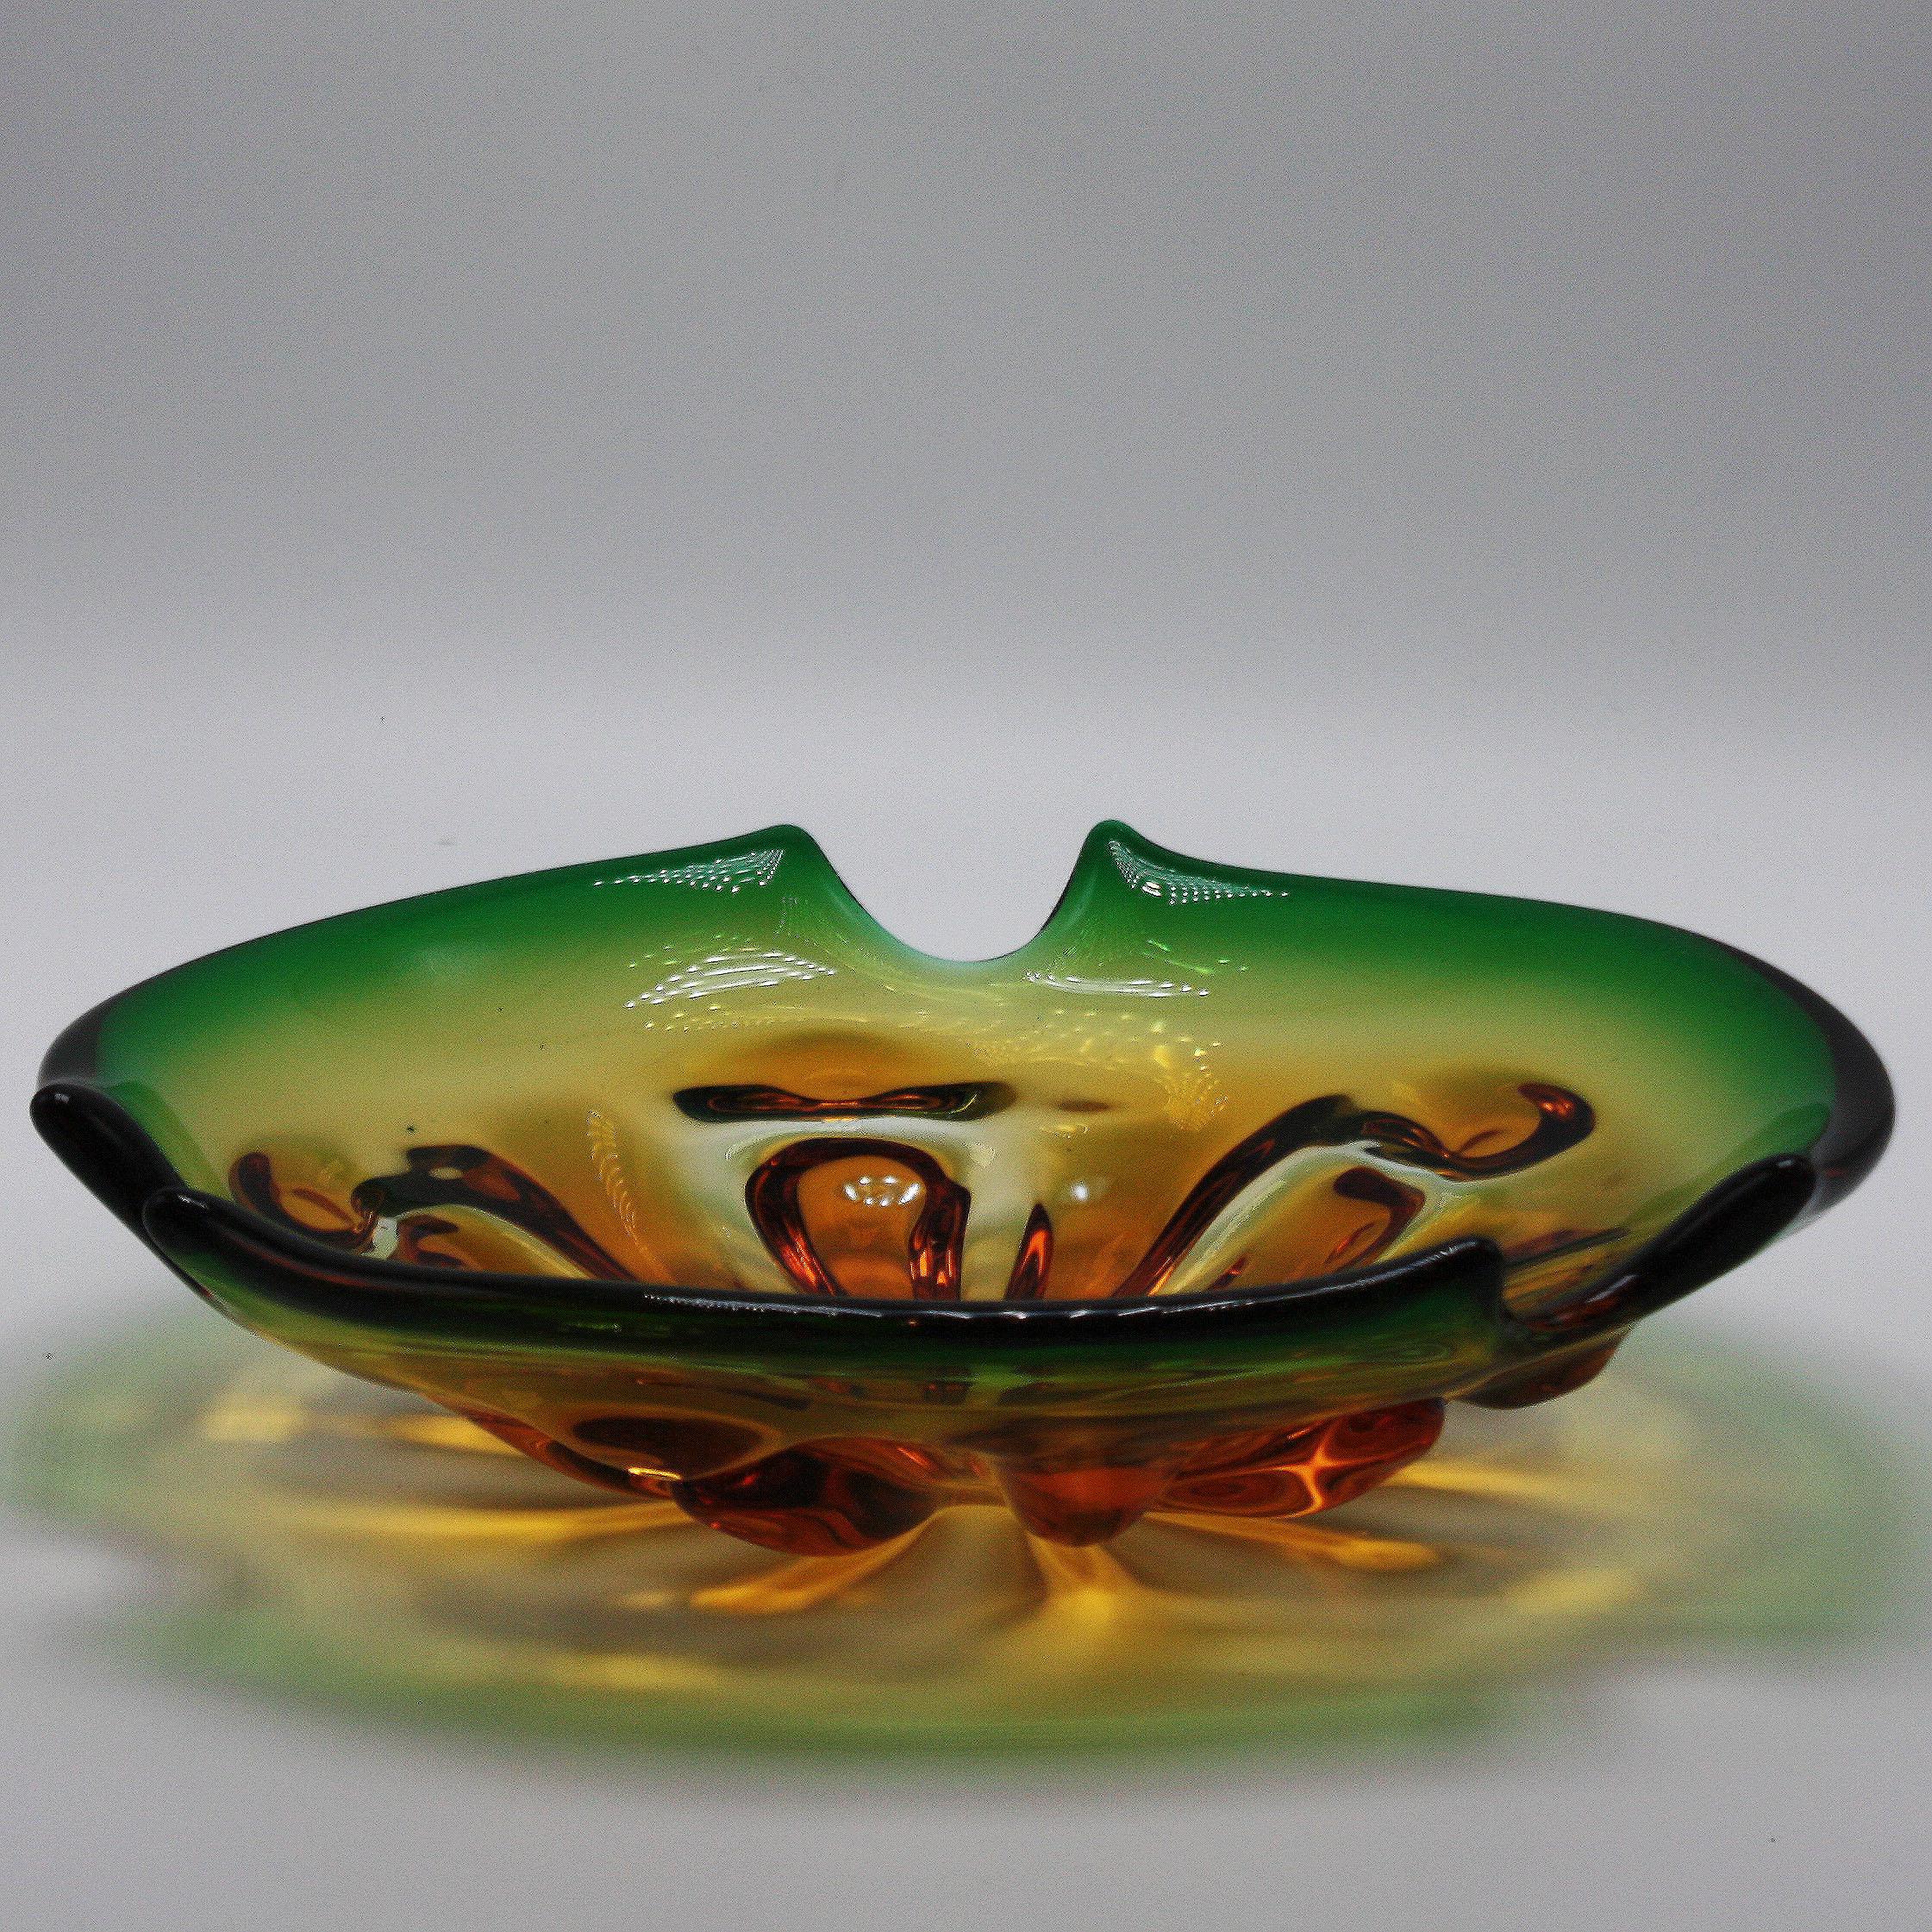 Amber and Green Murano glass bowl, circa 1960
Measures: 10” diameter X 2 1/2” height.